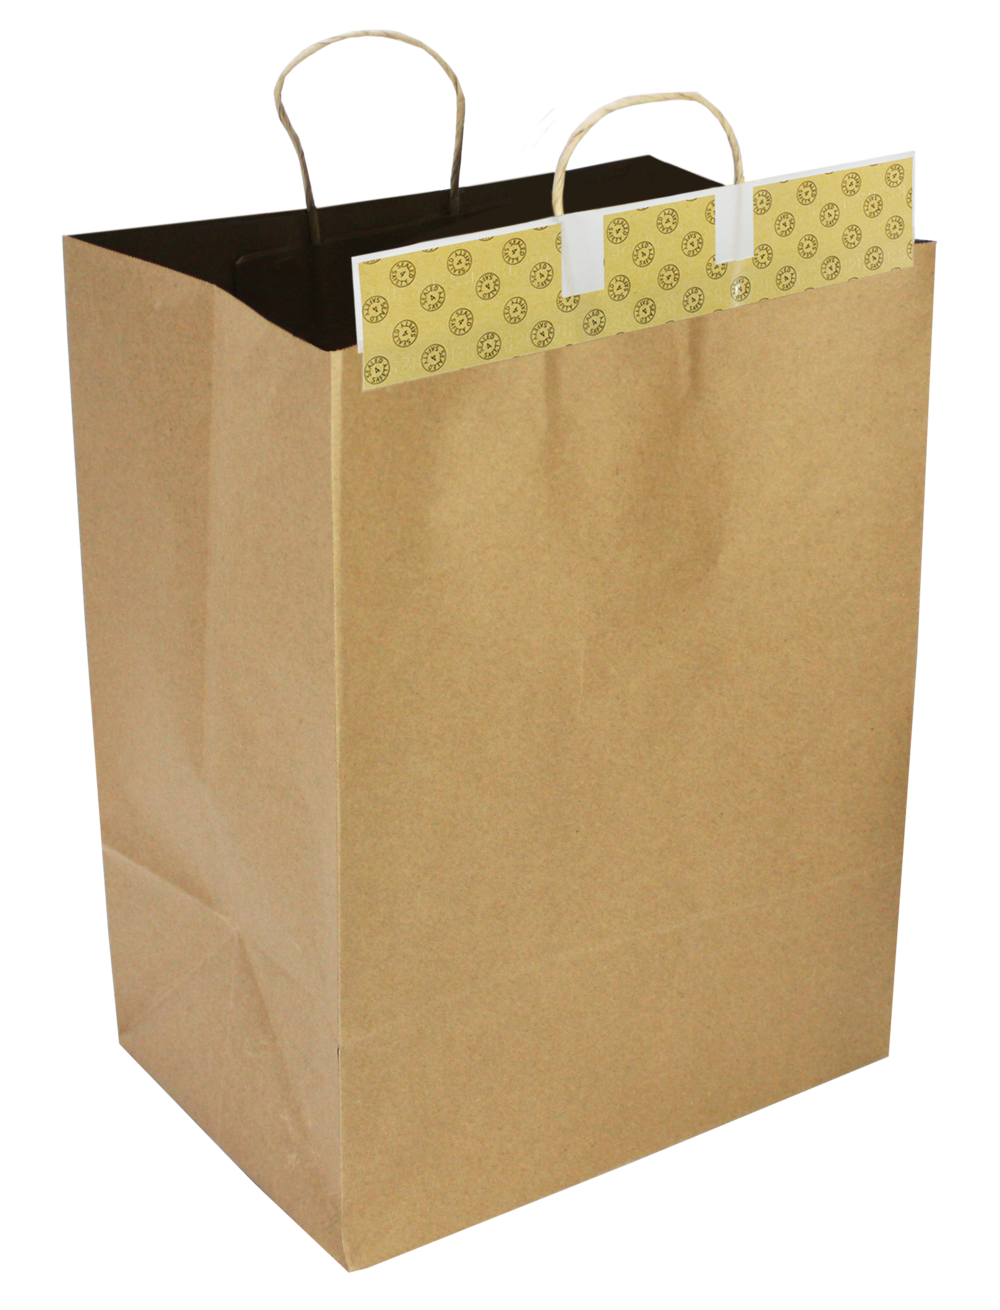 Download PNG image - Blank Paper Bag PNG Image 